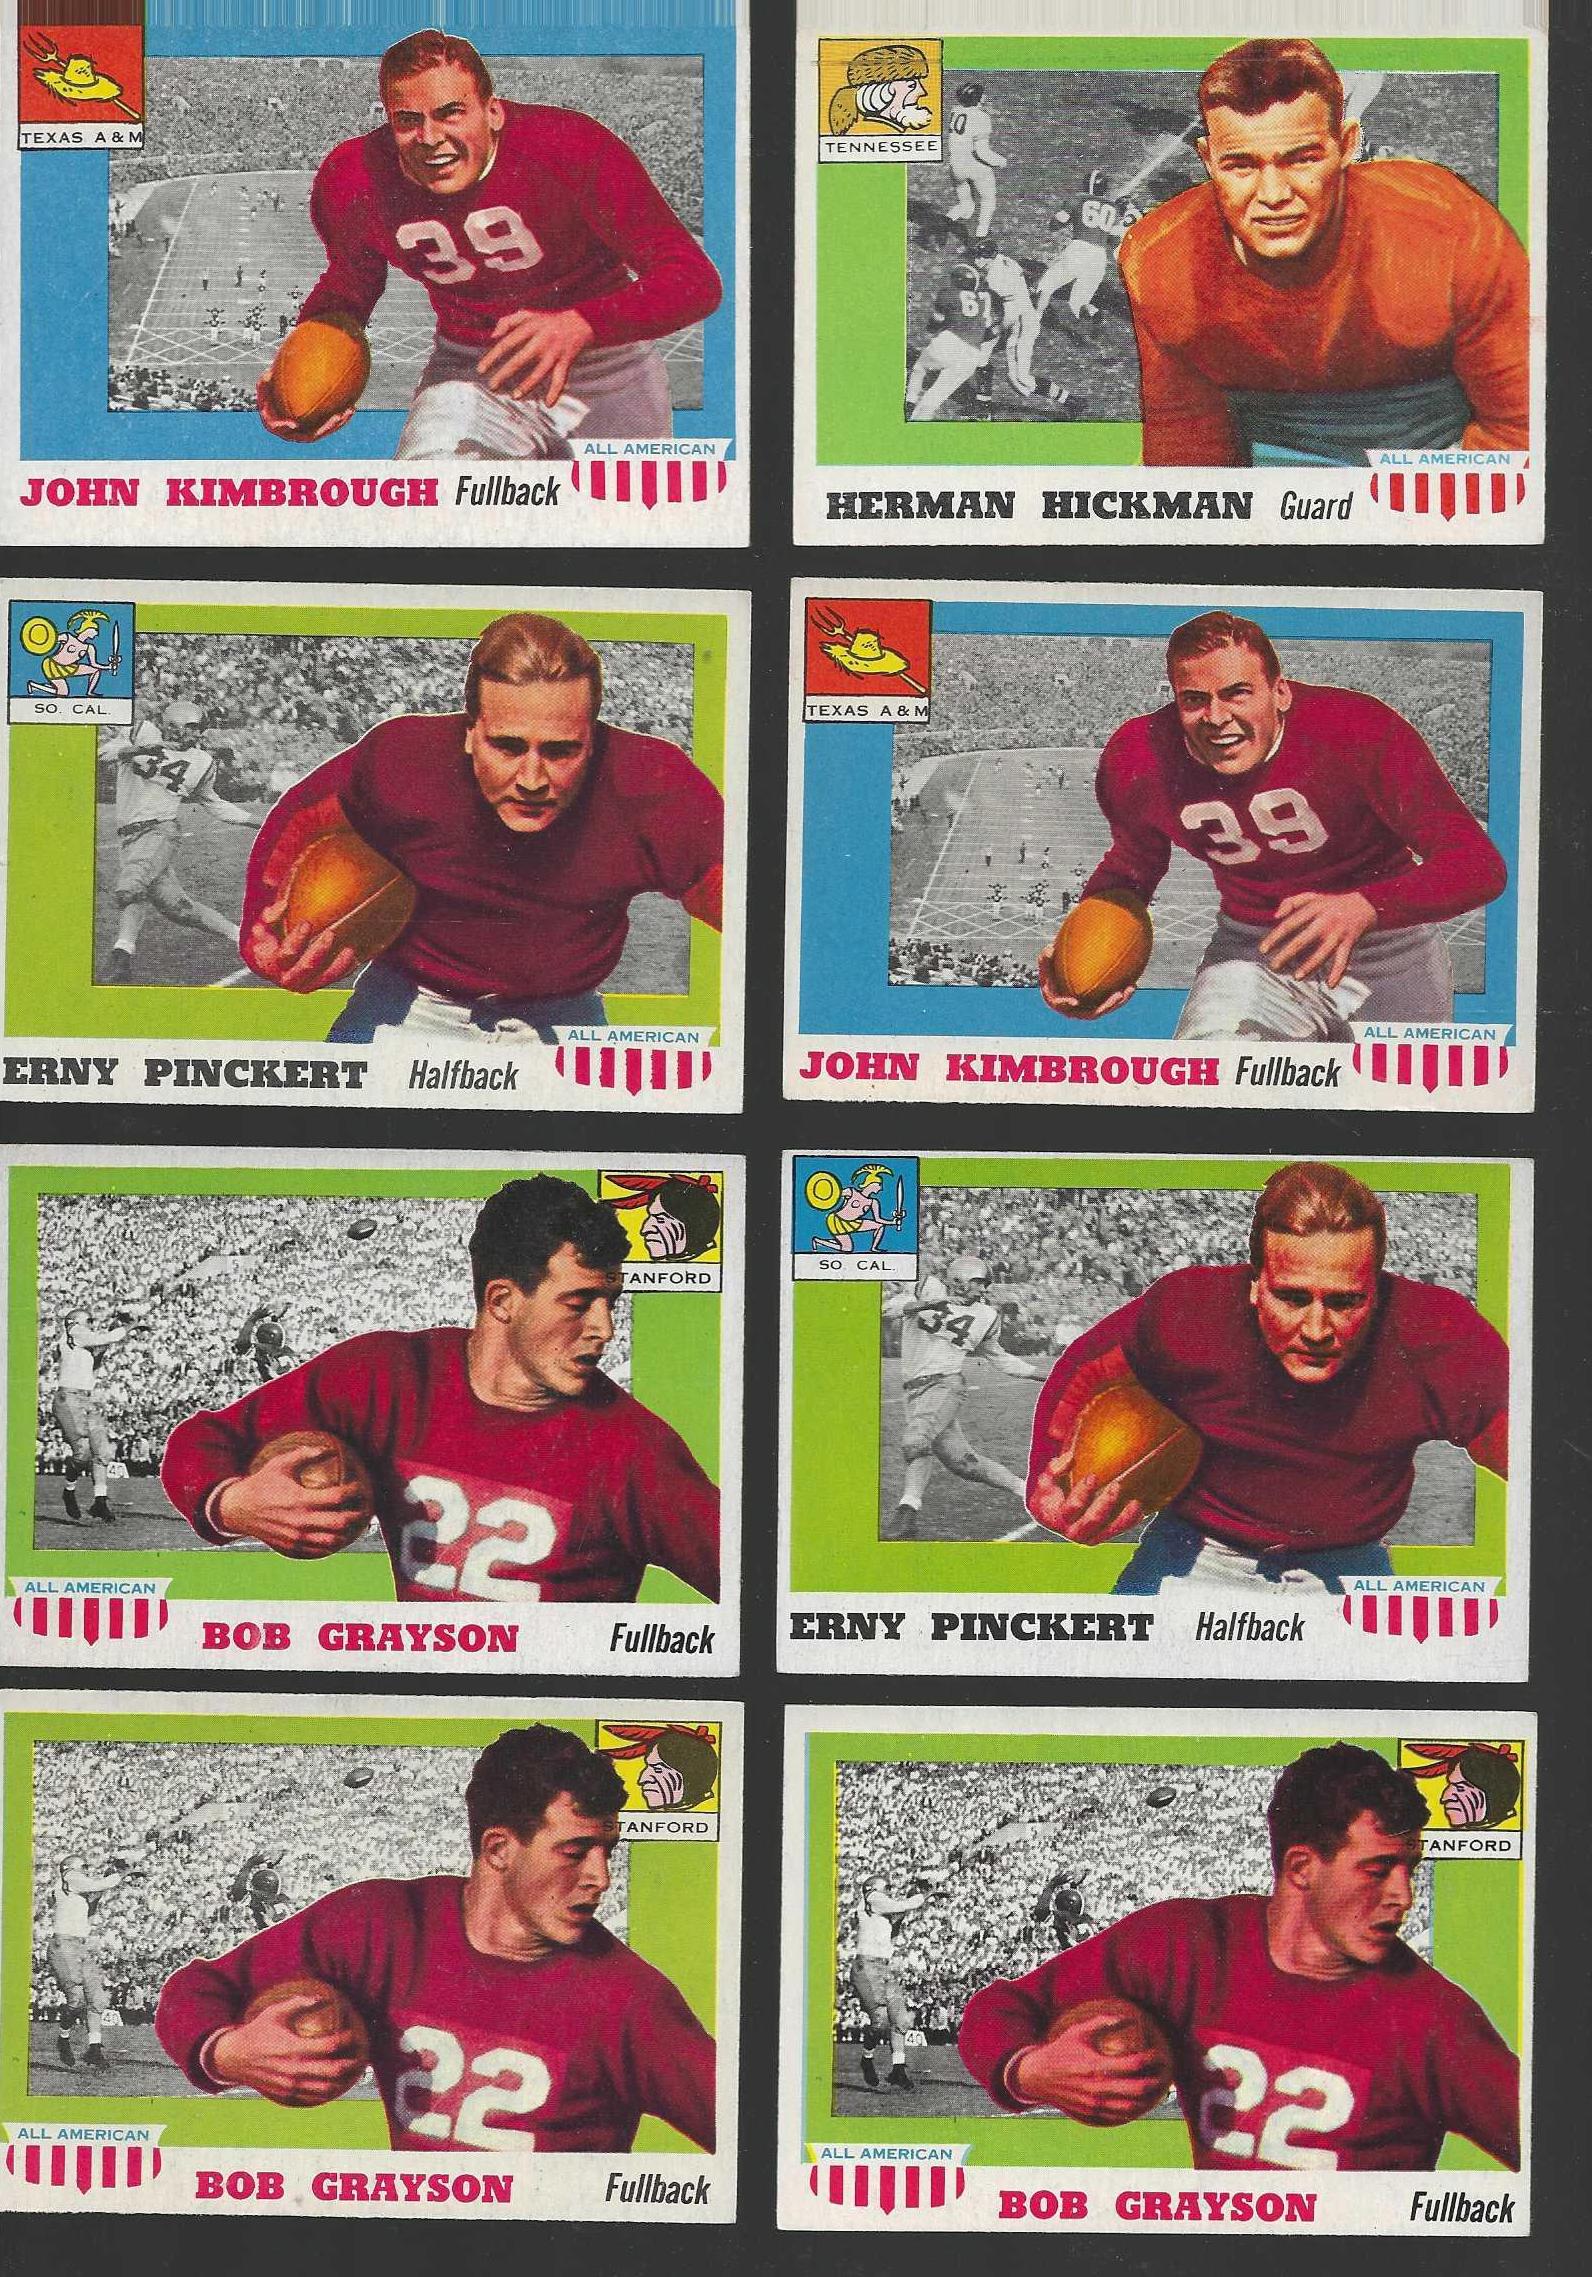 1955 Topps ALL-AMERICAN FB #  4 Erny Pinckert (USC) Football cards value